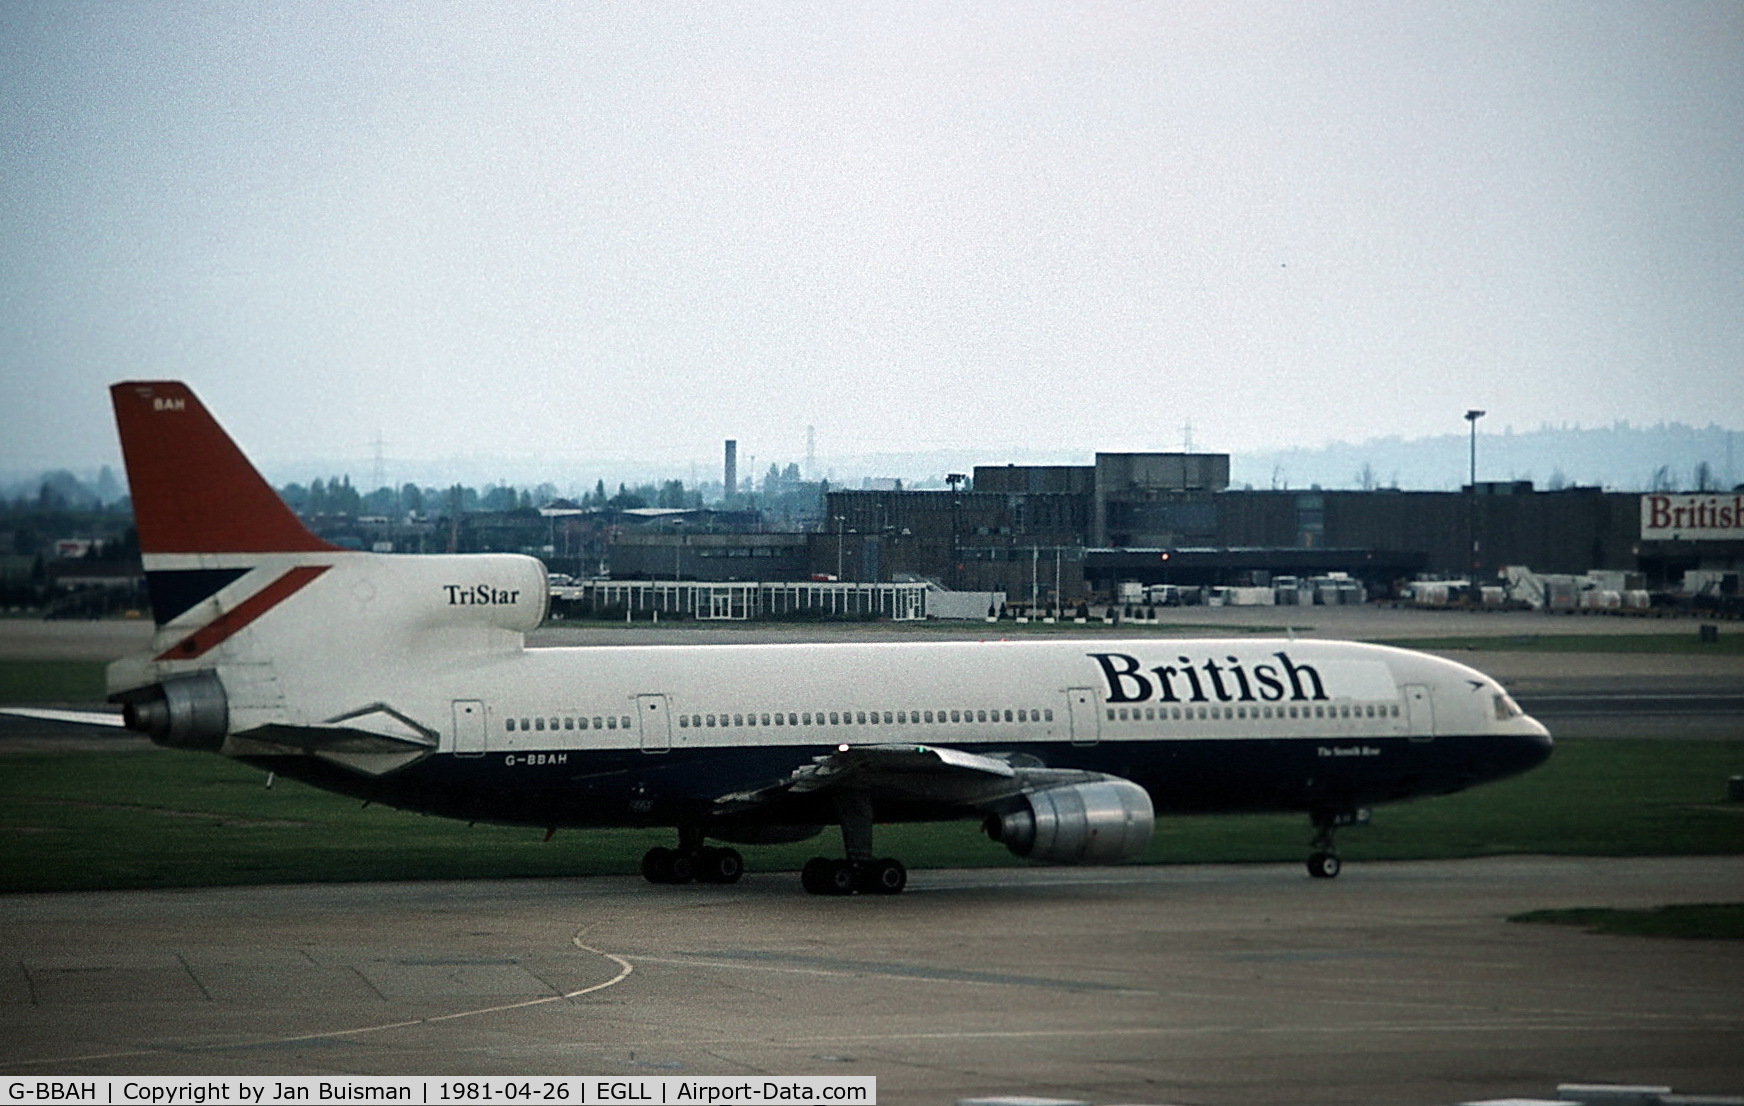 G-BBAH, 1974 Lockheed L-1011-385-1 TriStar 1 C/N 193E-1101, British Airways